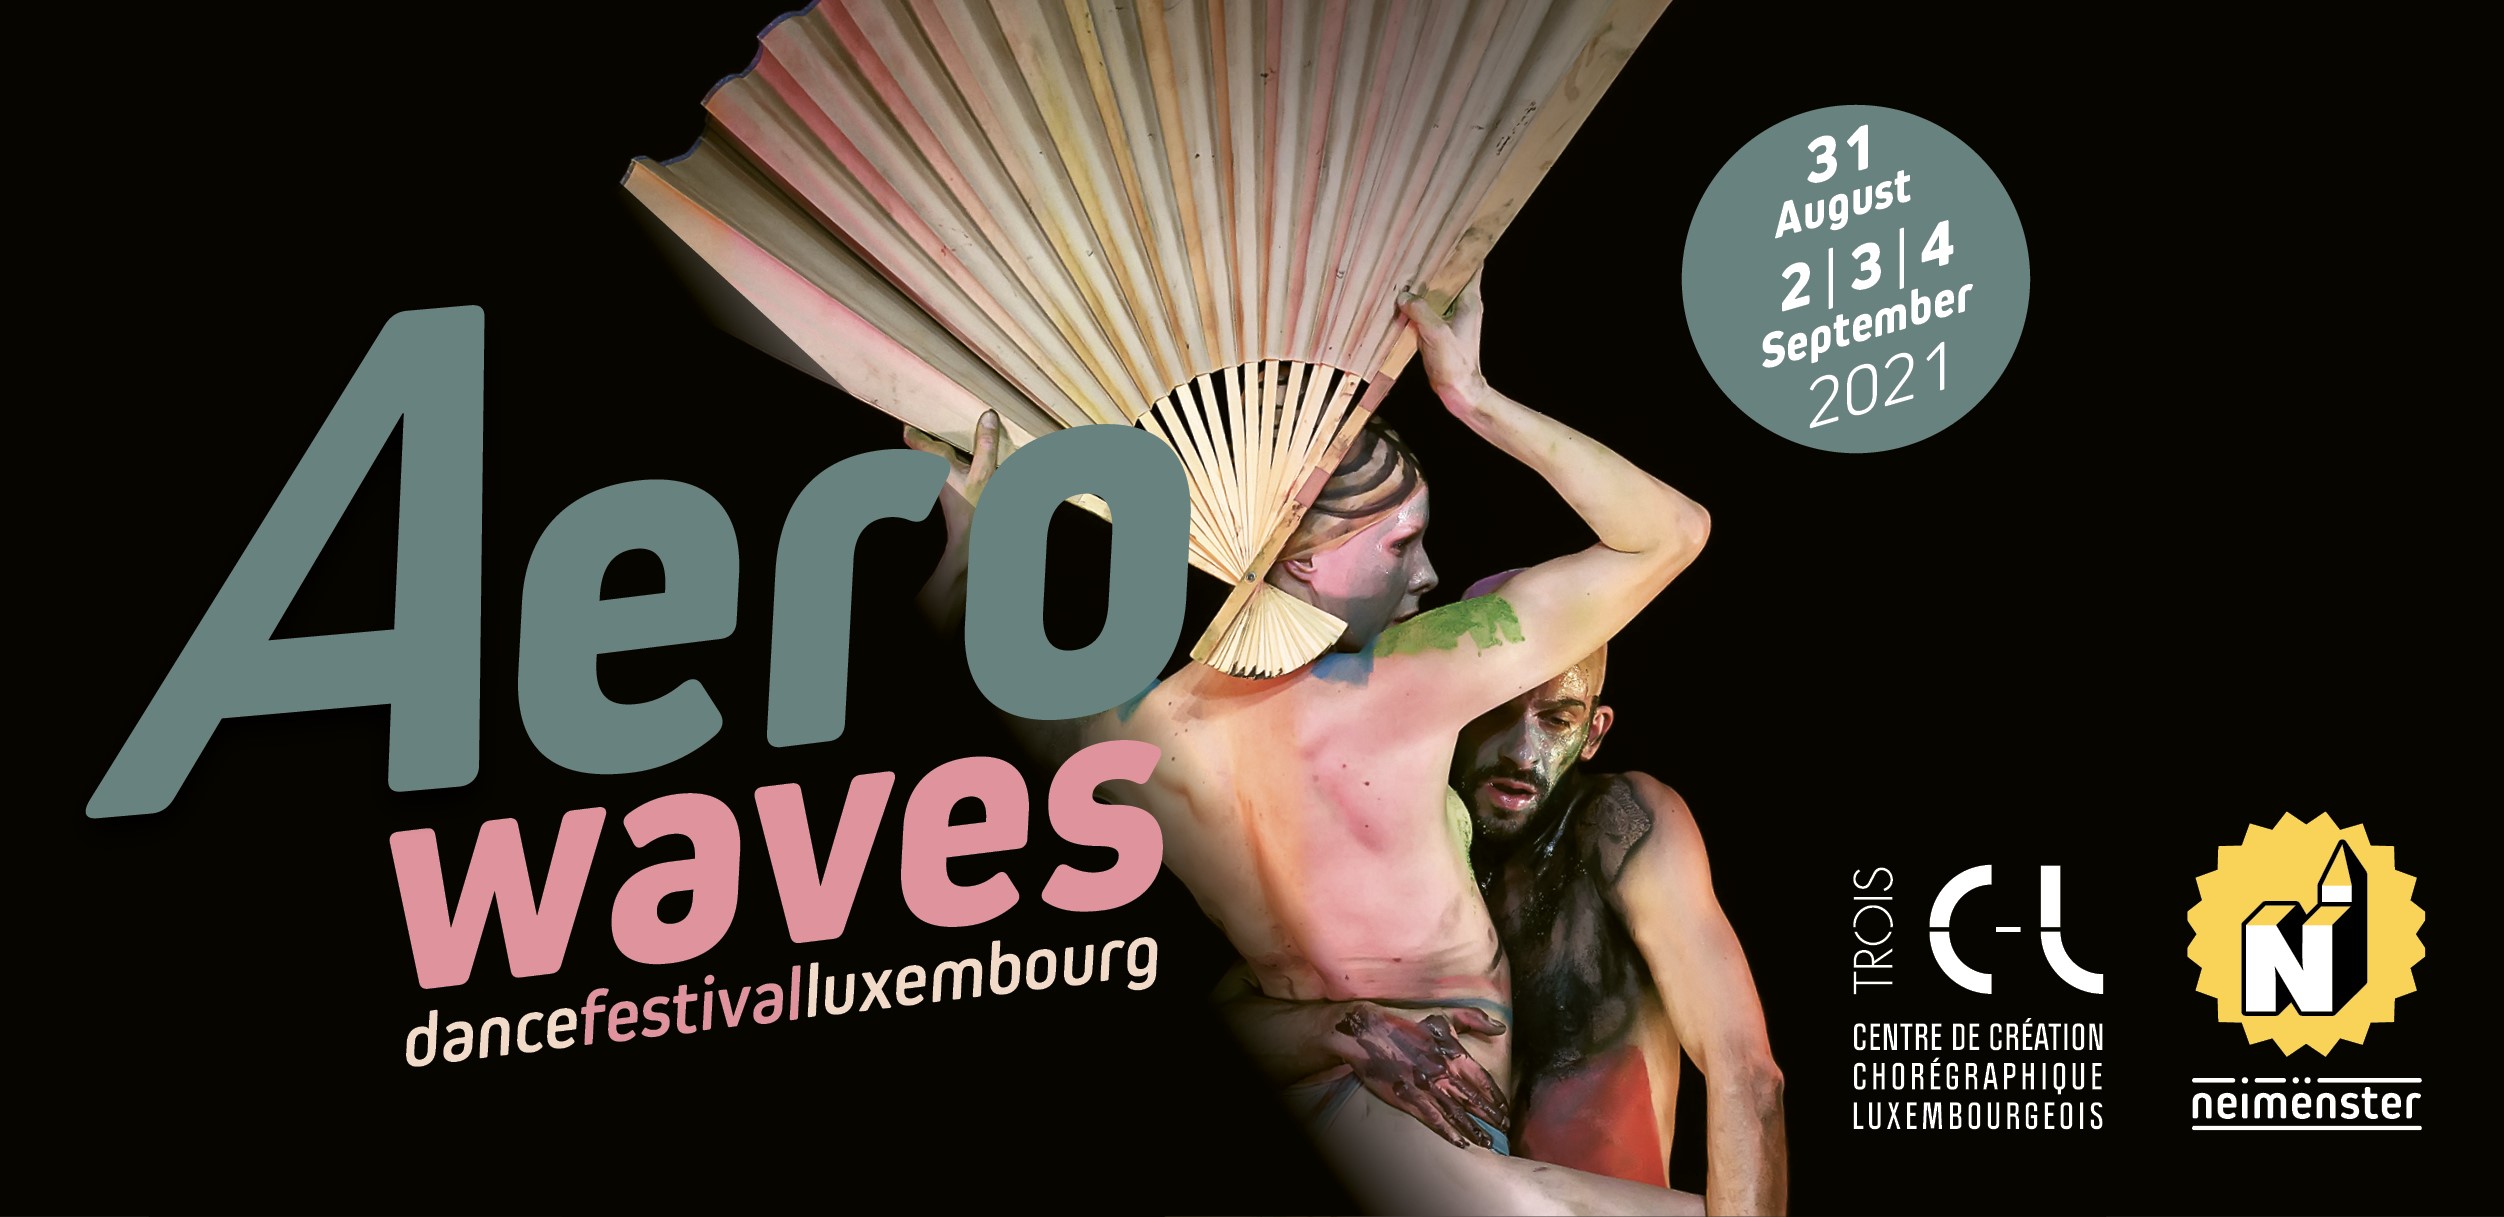 Anne-Mareike Hess et Léa Tirabasso à l'Aerowaves Dance Festival